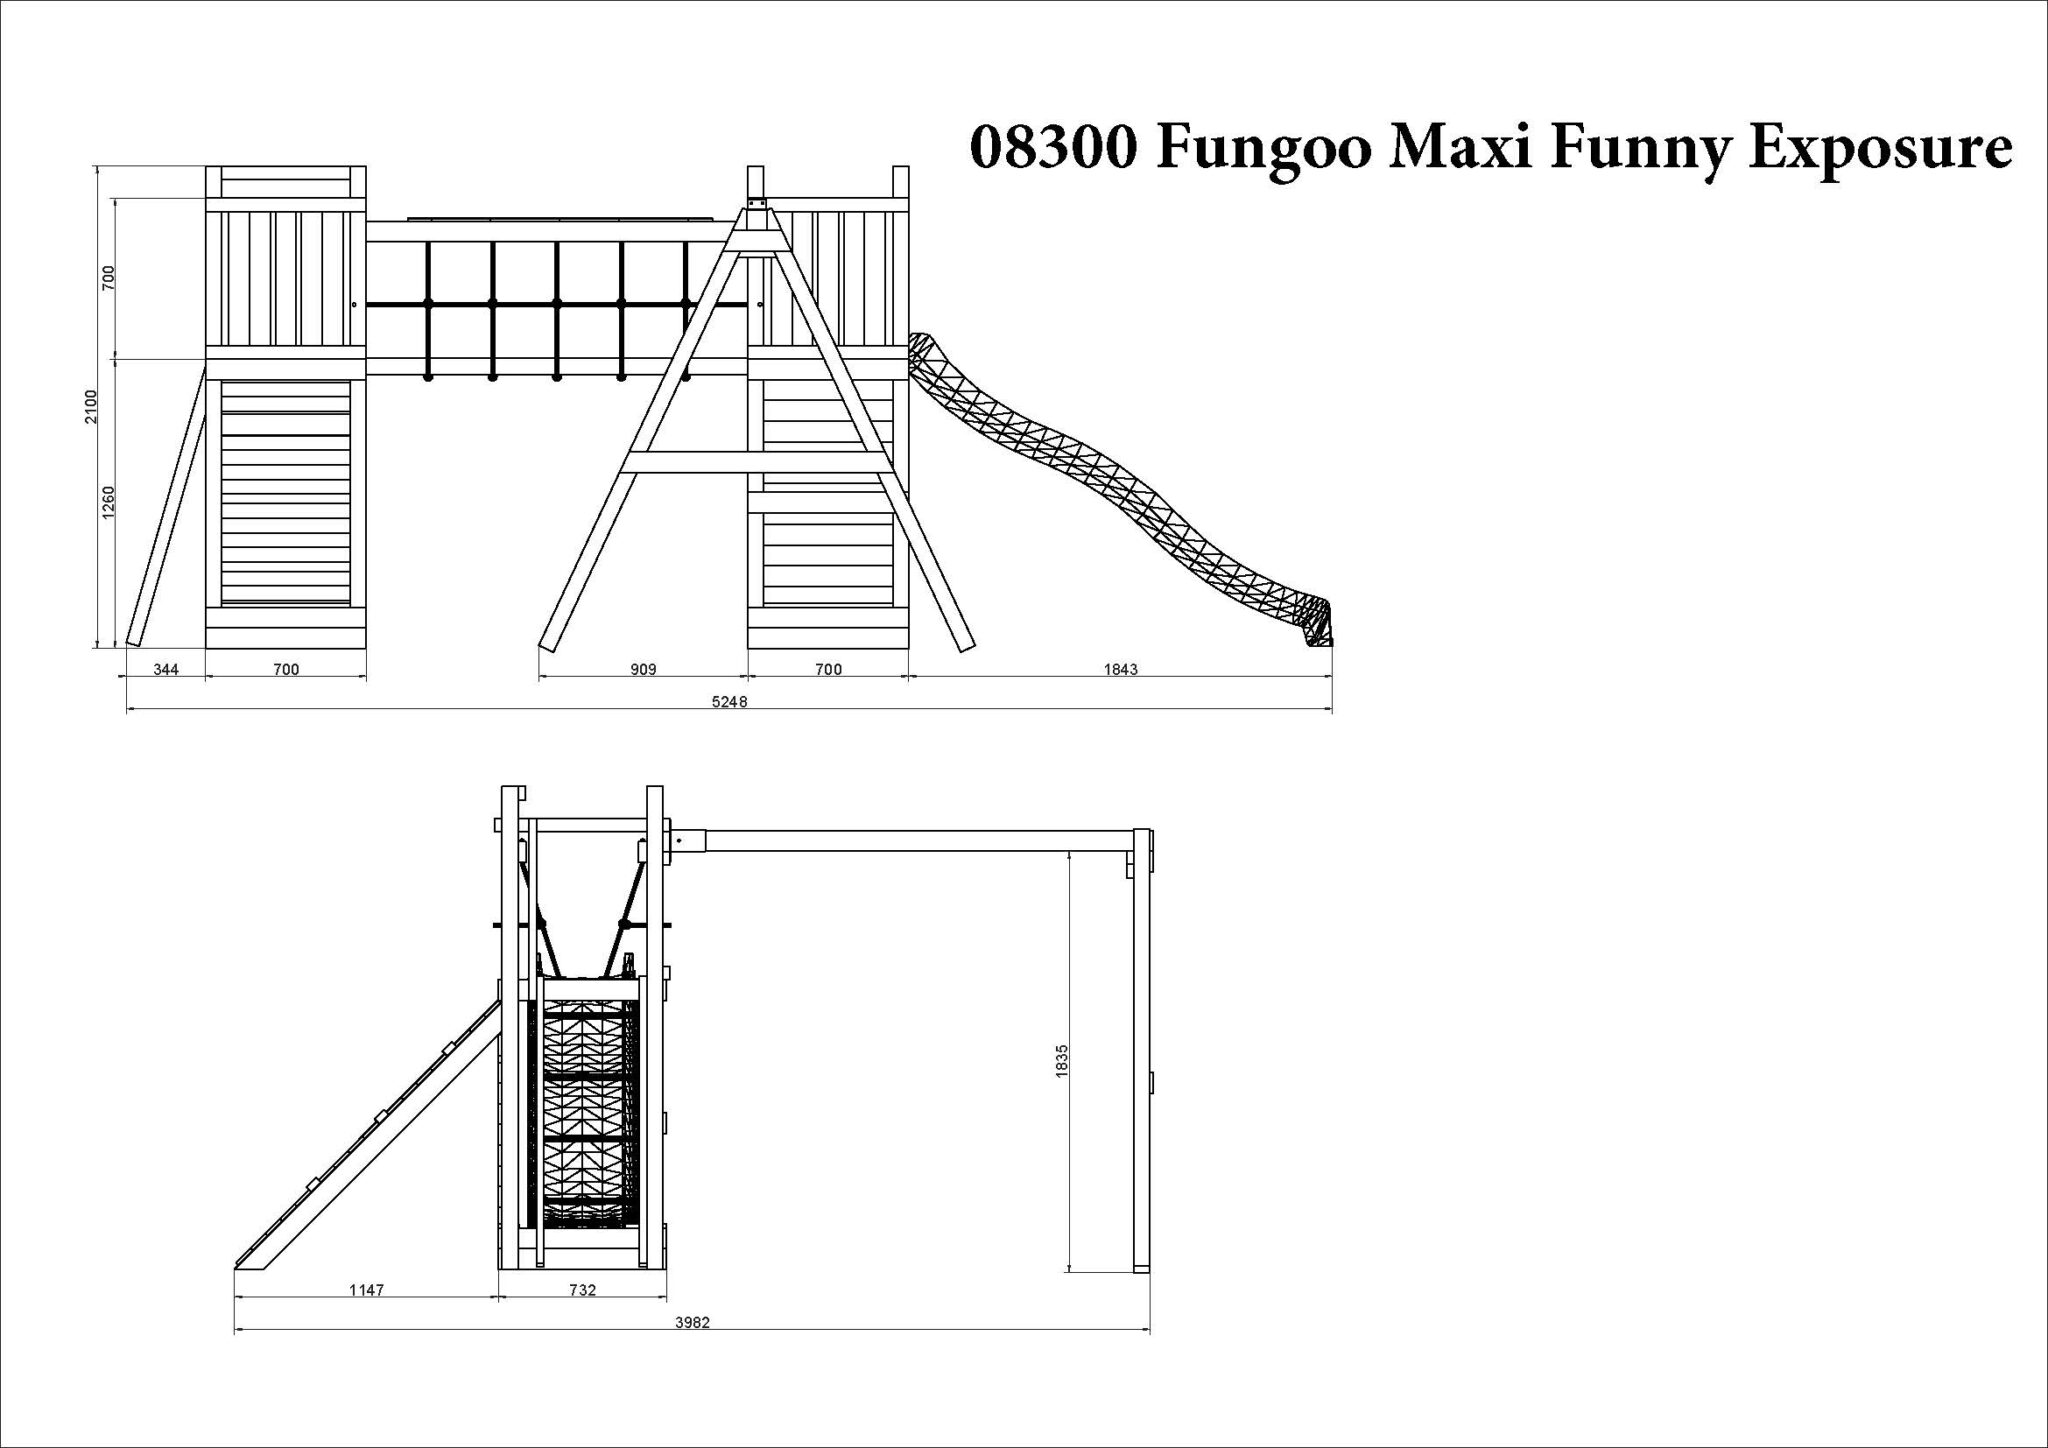 Fungoo Spielturm Maxi Funny Exposure mit 2 Türmen, Kletterwand und Rampe